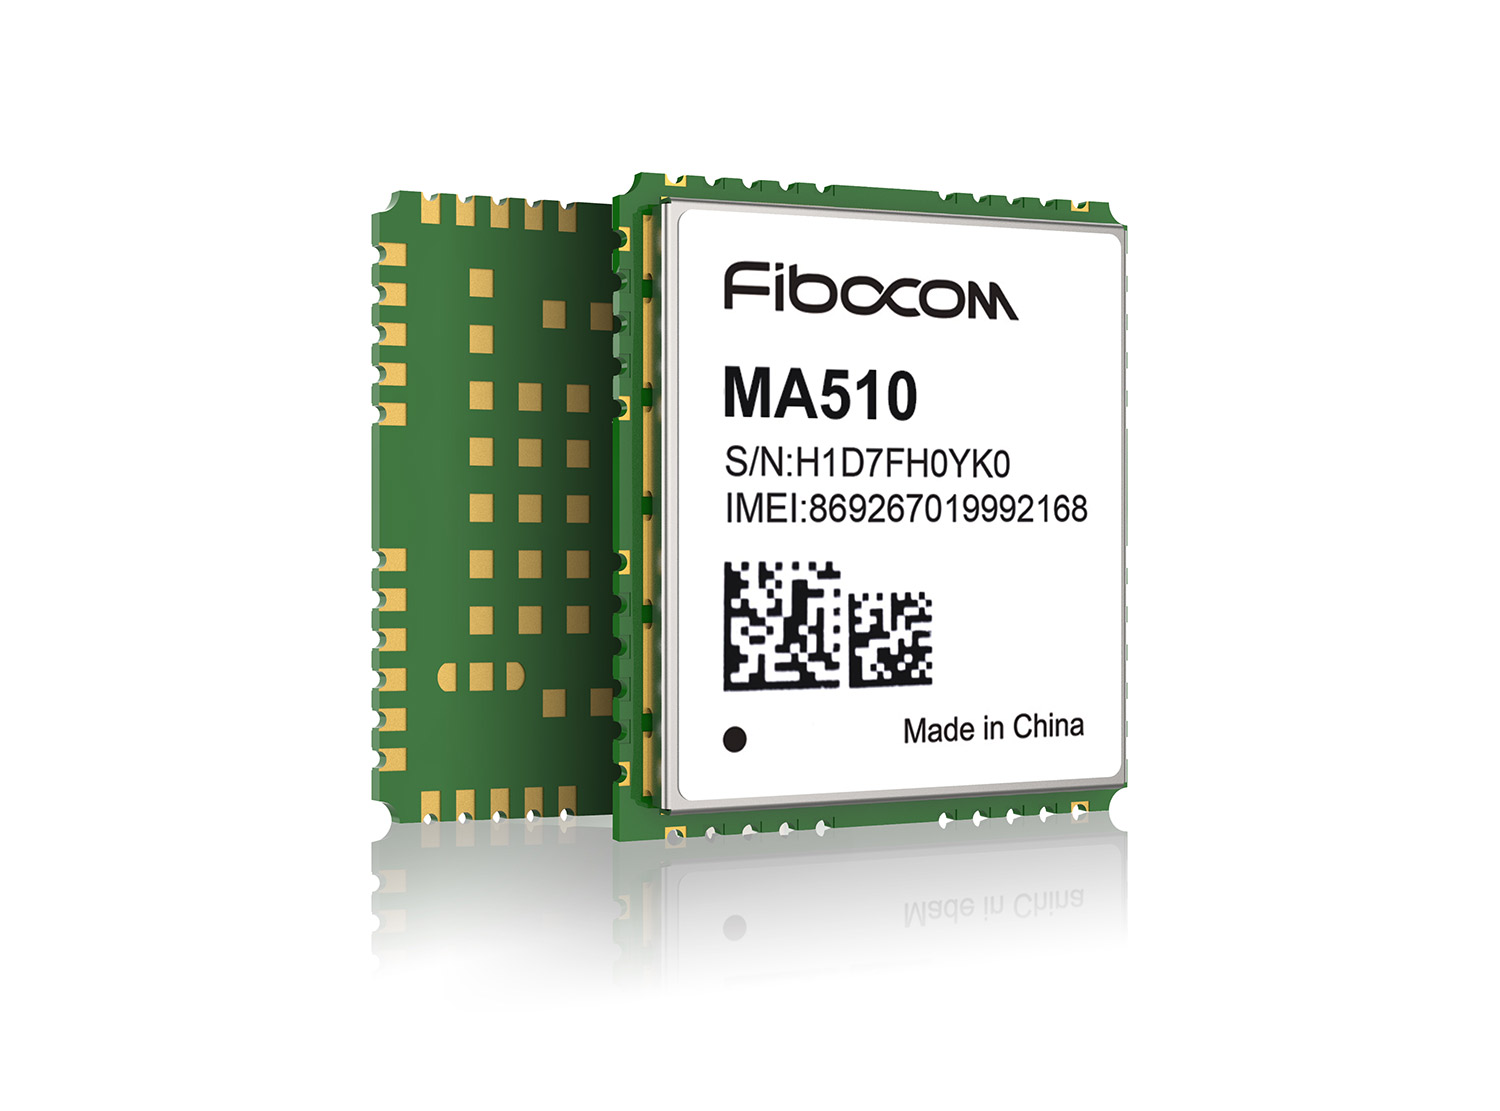 Fibocom LPWA Module MA510 is Certified by KDDI - Company News - Fibocom